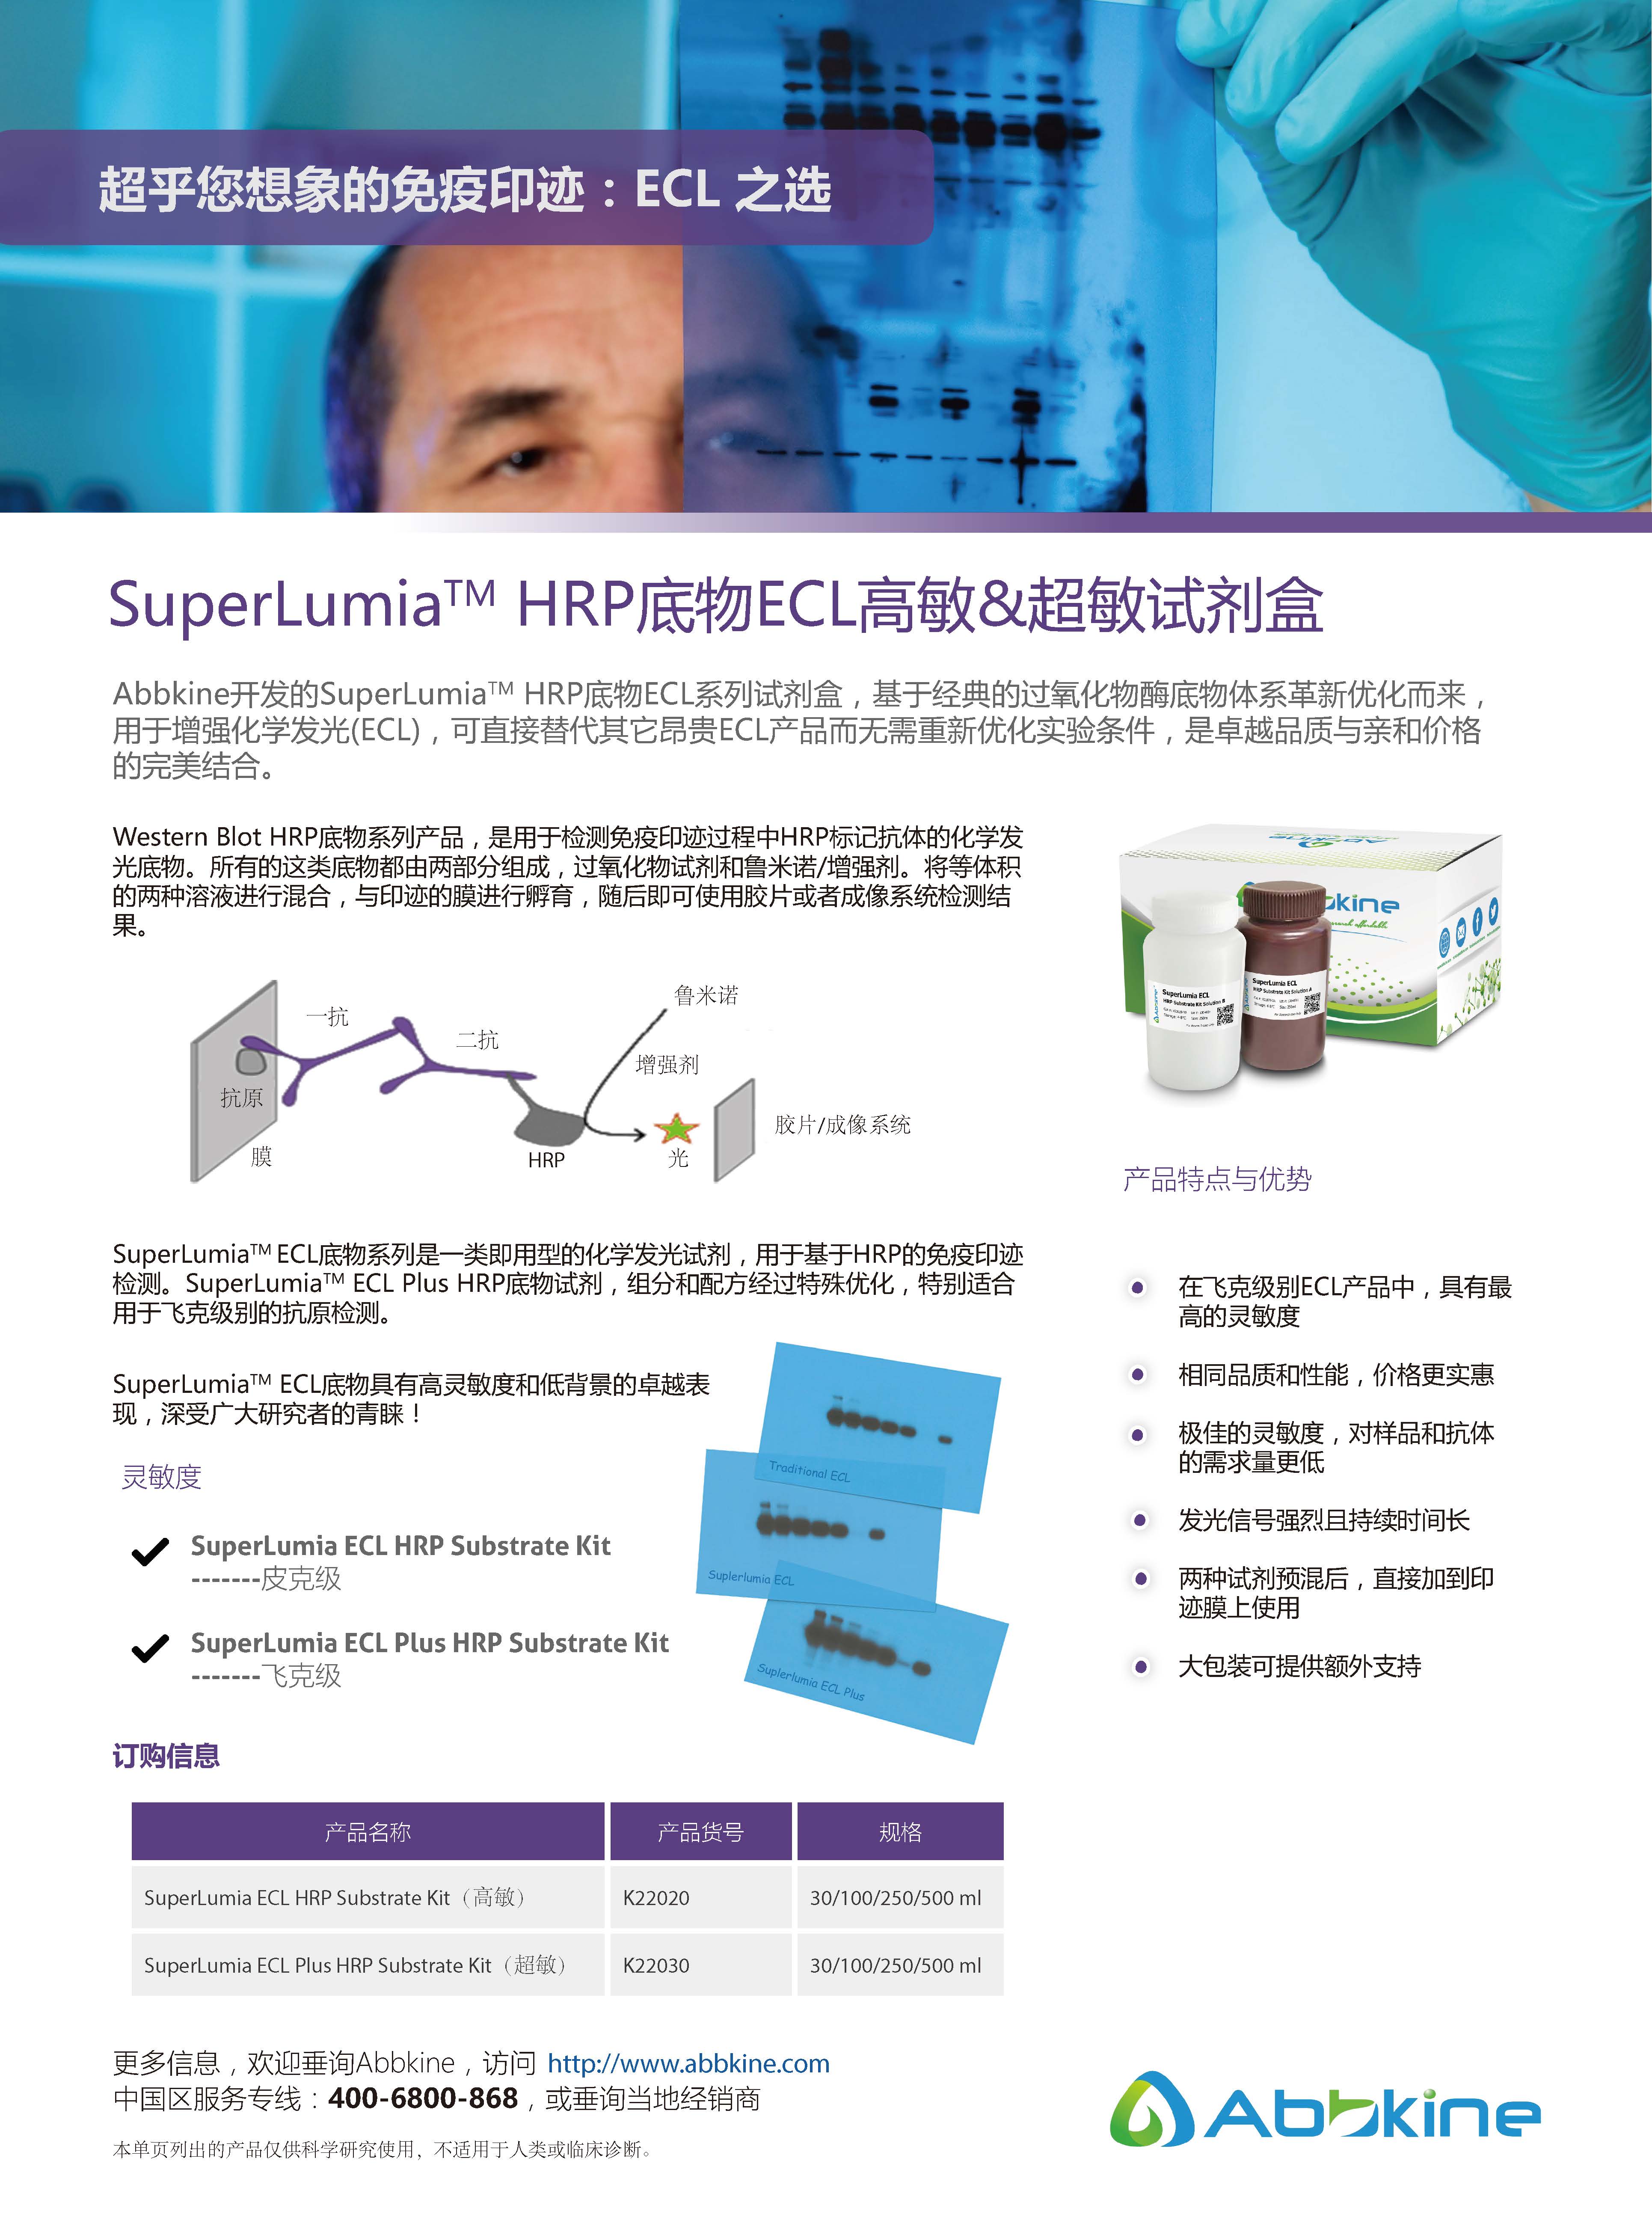 SuperLumia HRP底物ECL高敏&超敏试剂盒-产品手册